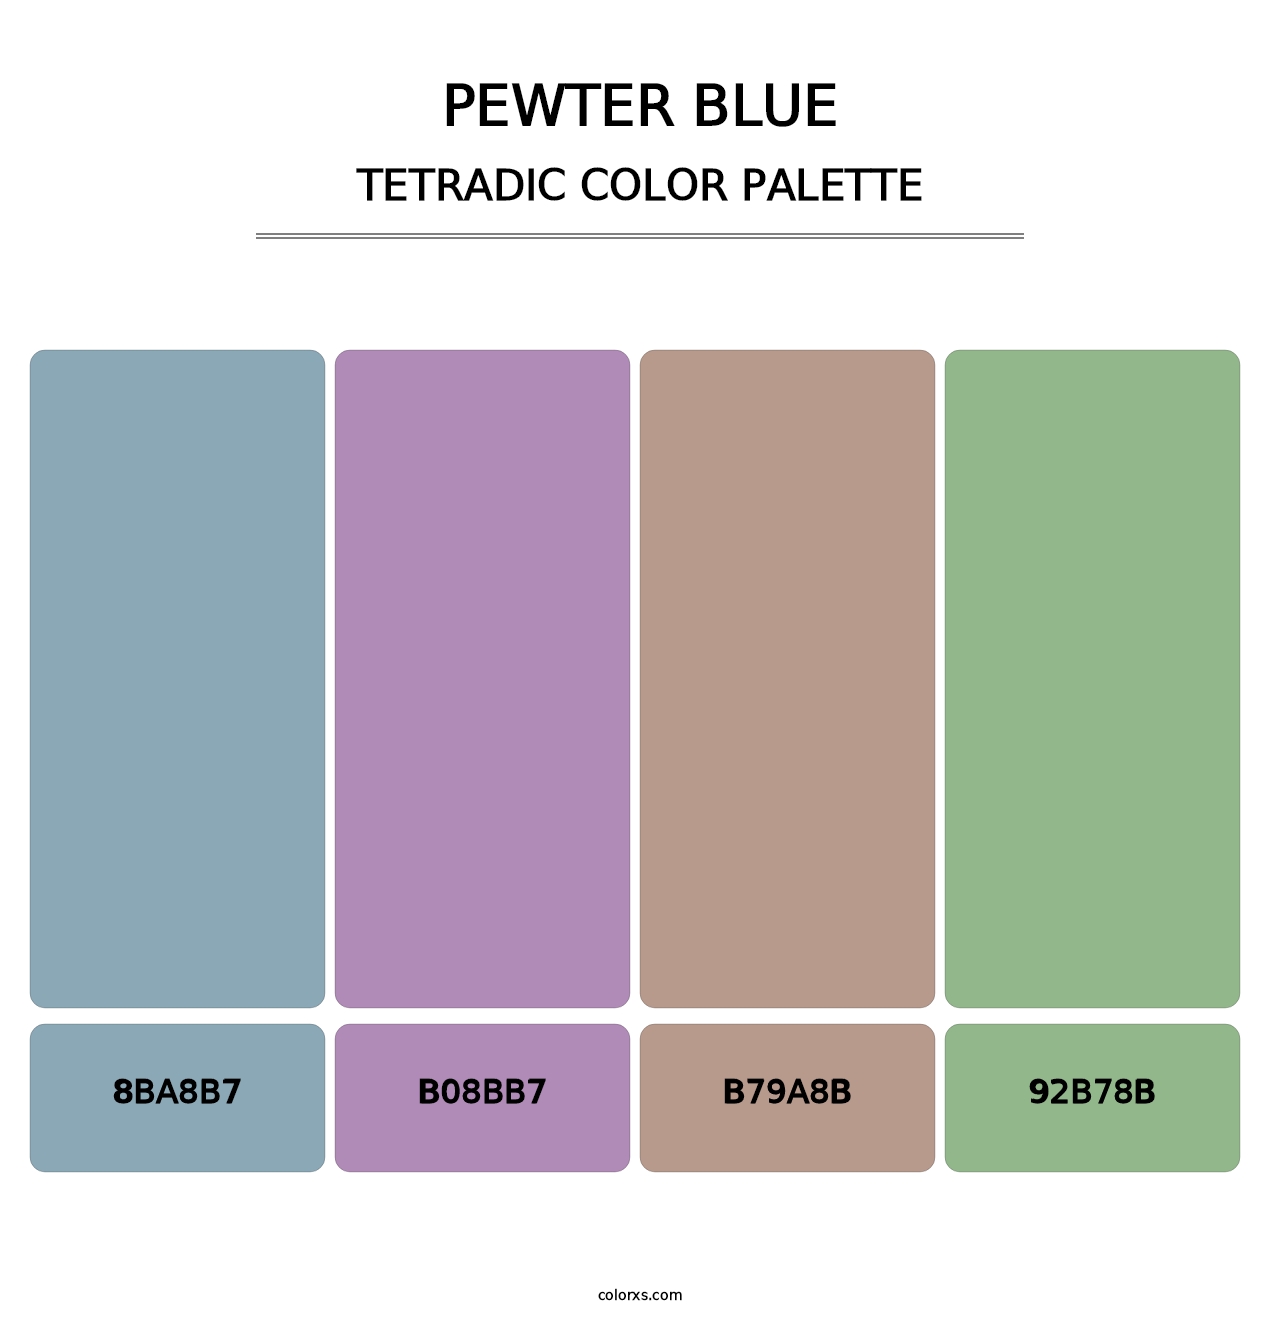 Pewter Blue - Tetradic Color Palette